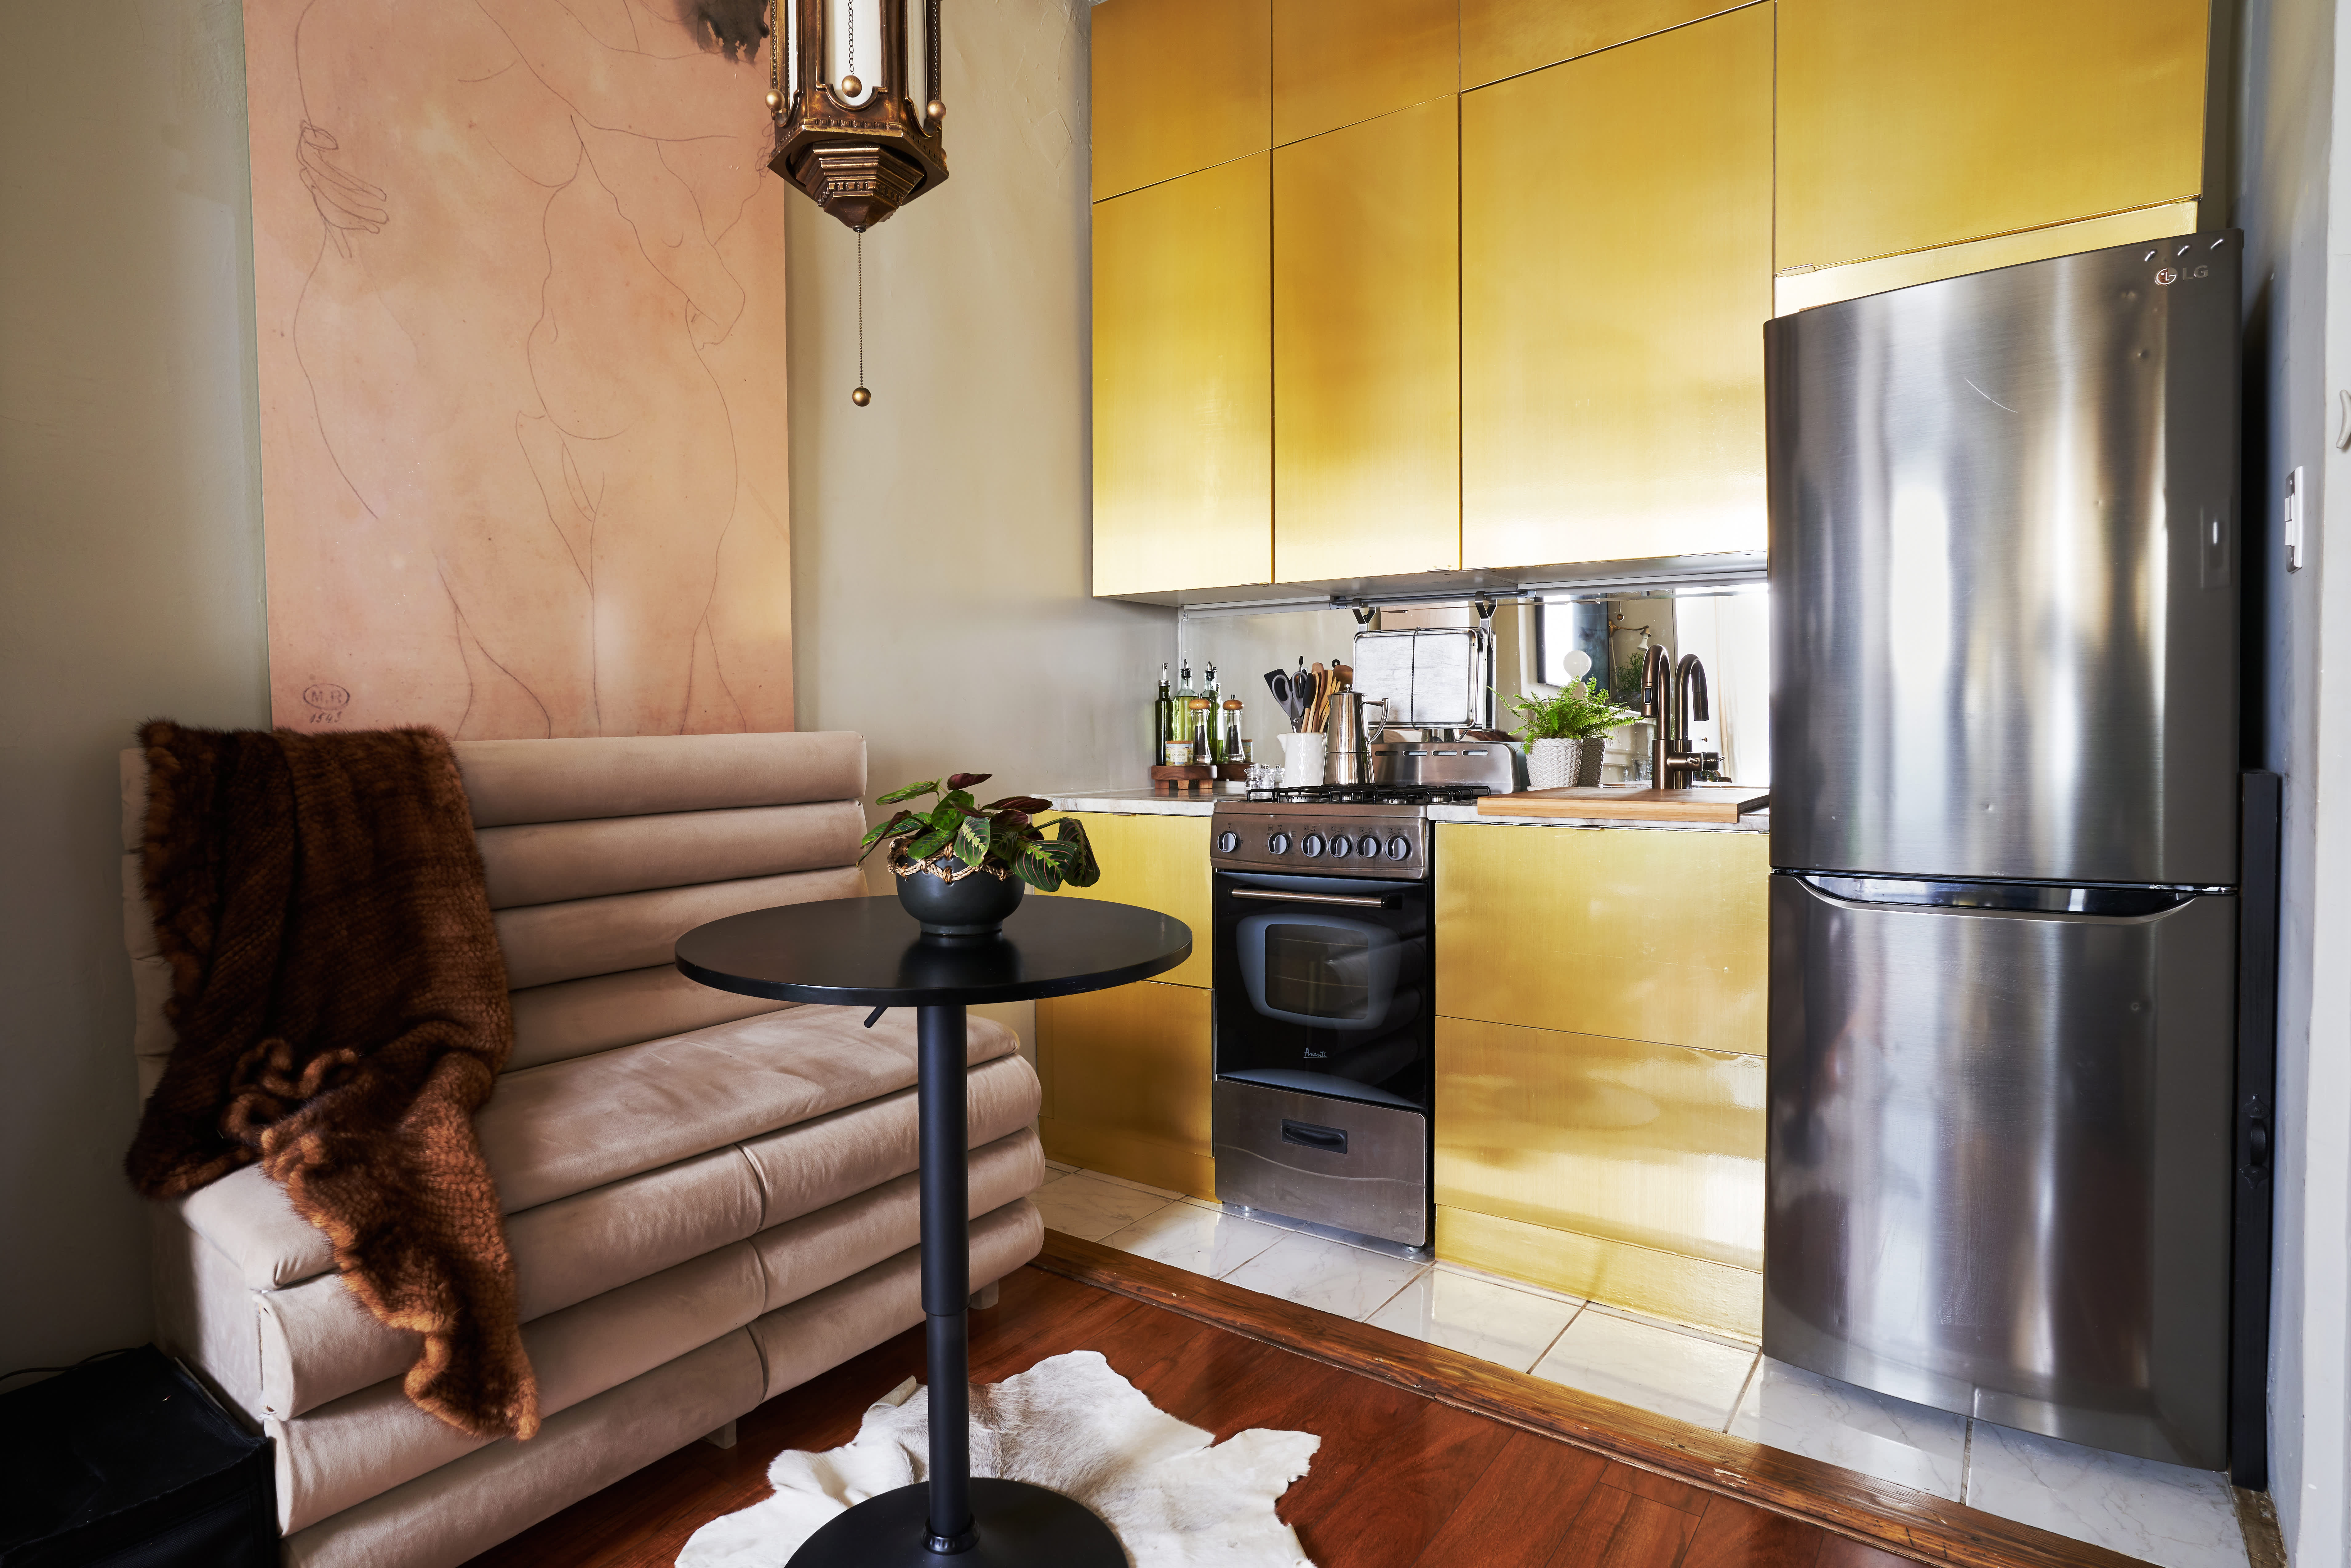 30 Beautiful Refrigerator Design Ideas